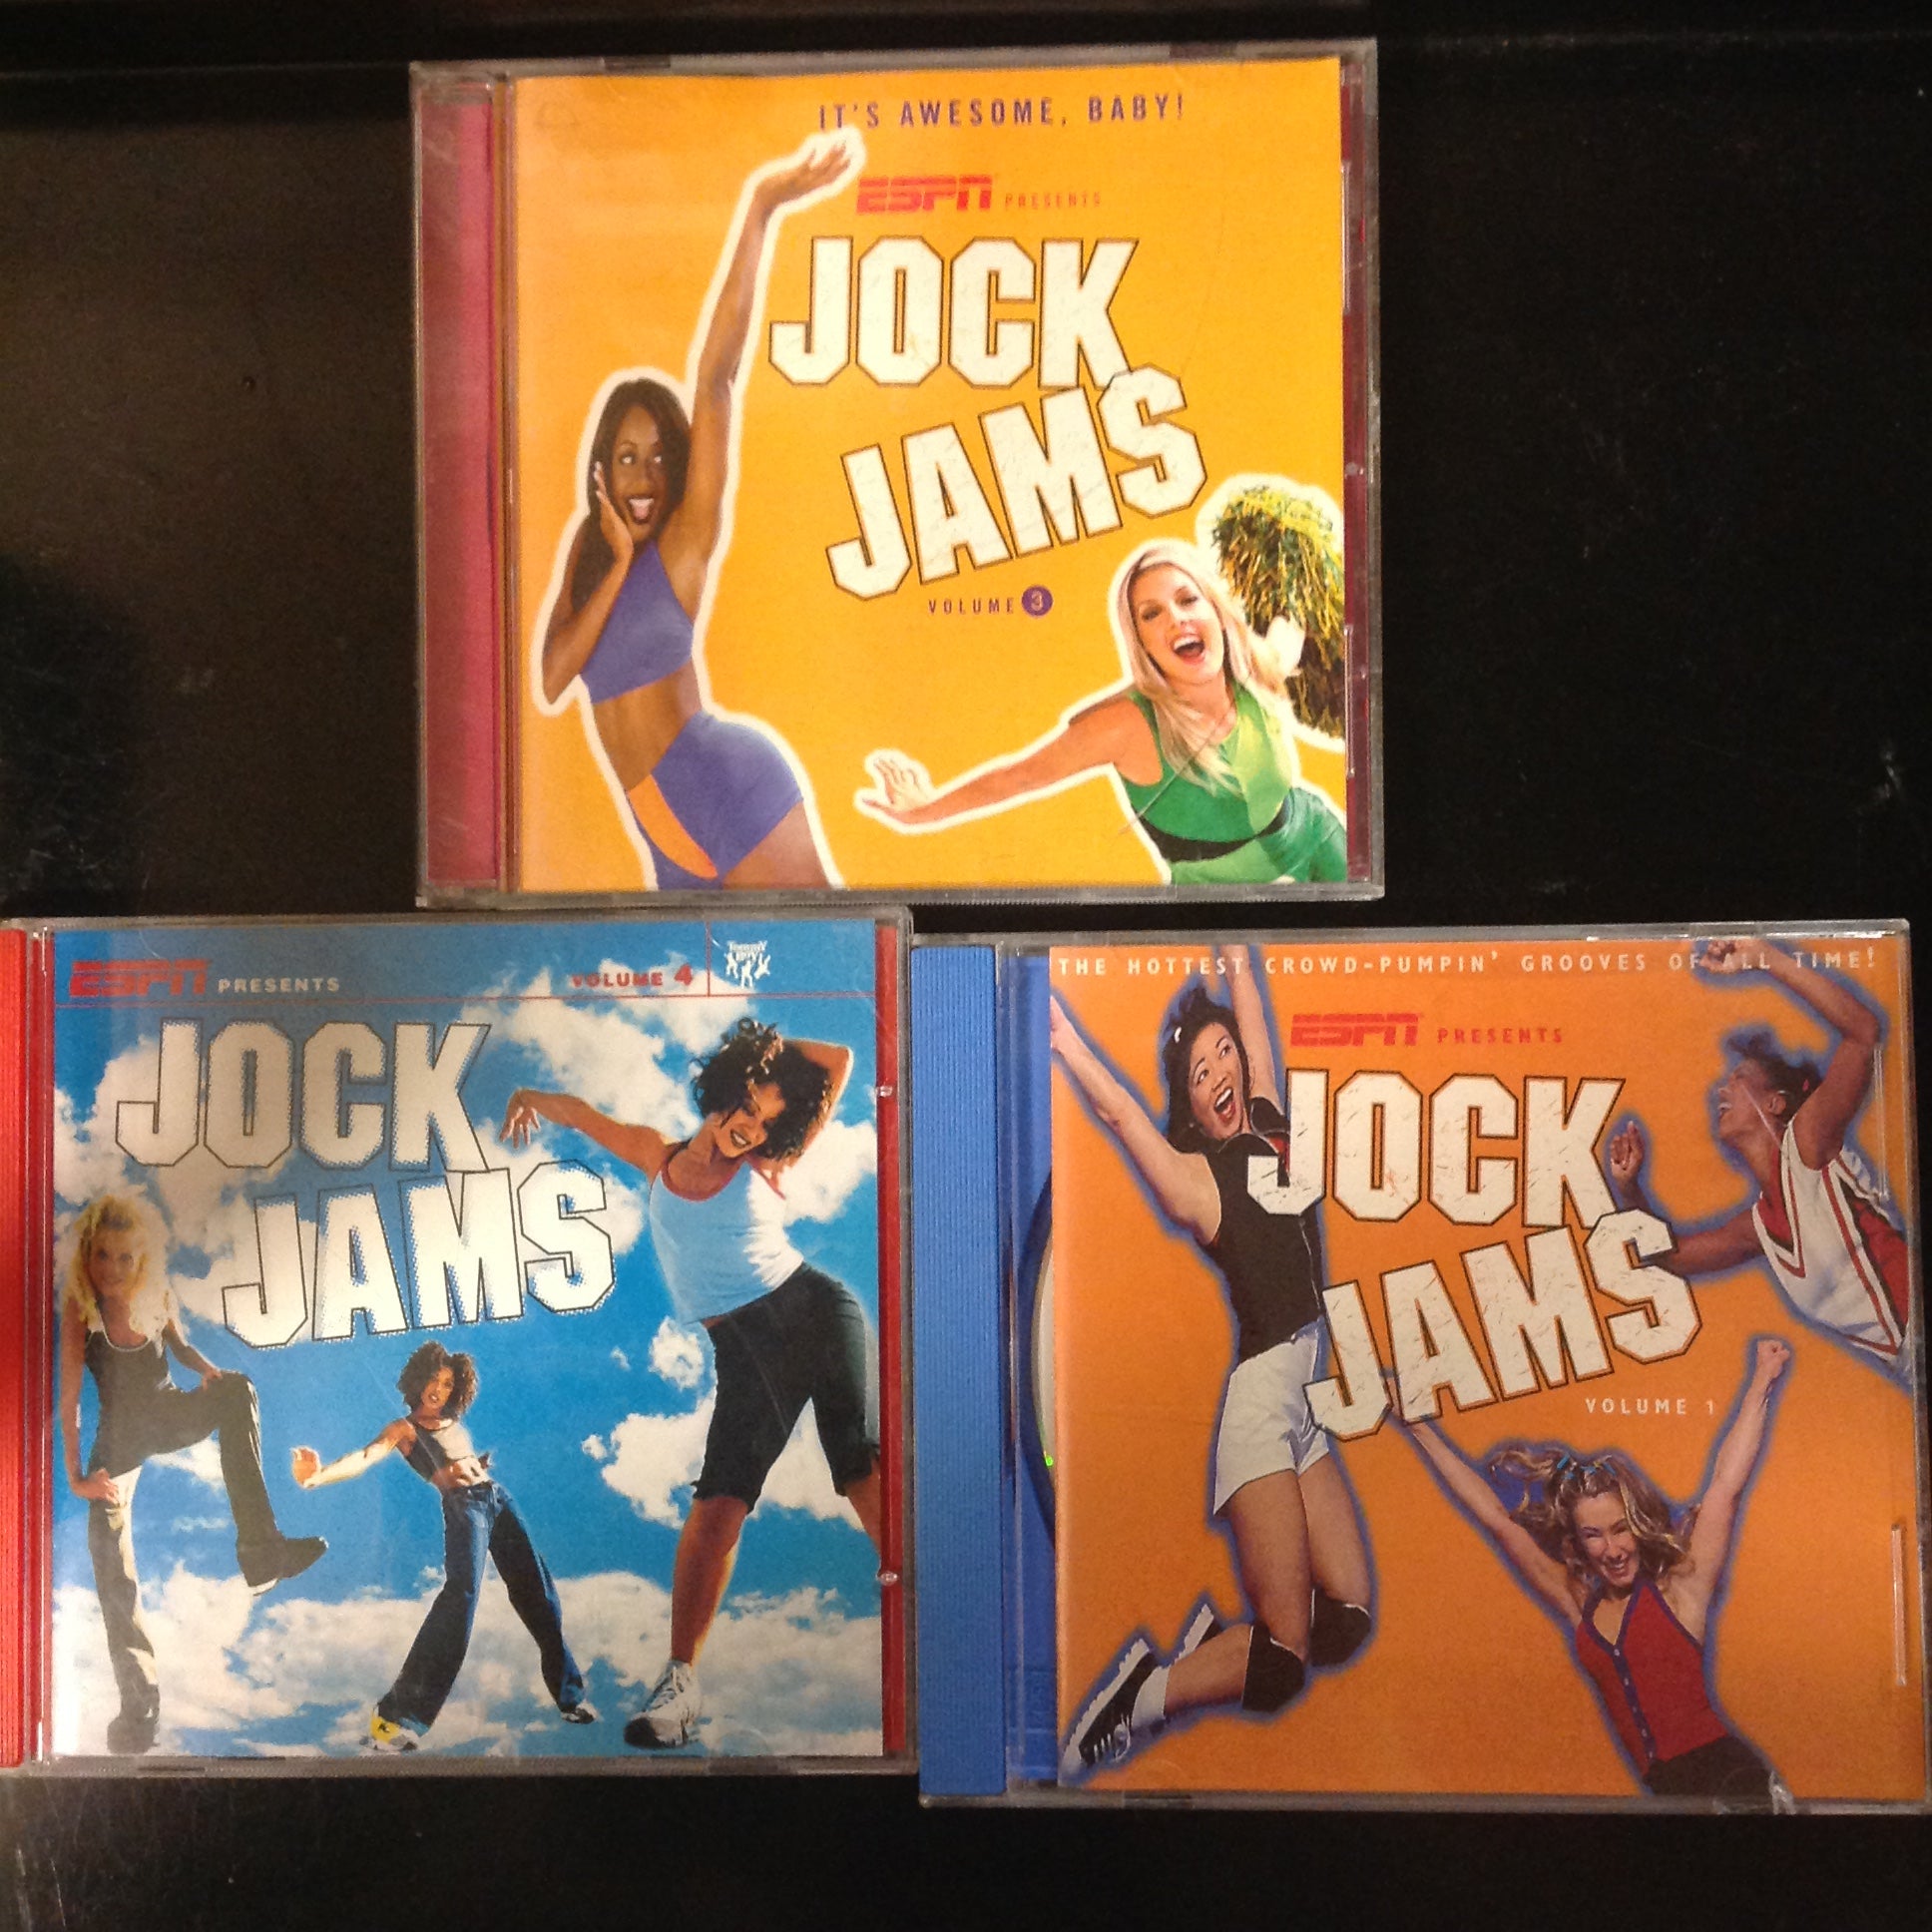 3 Disc SET BARGAIN CDs Jock Jams Cheerleading Music Vol. 1 3 & 4 Rock Half Time Football Basketball